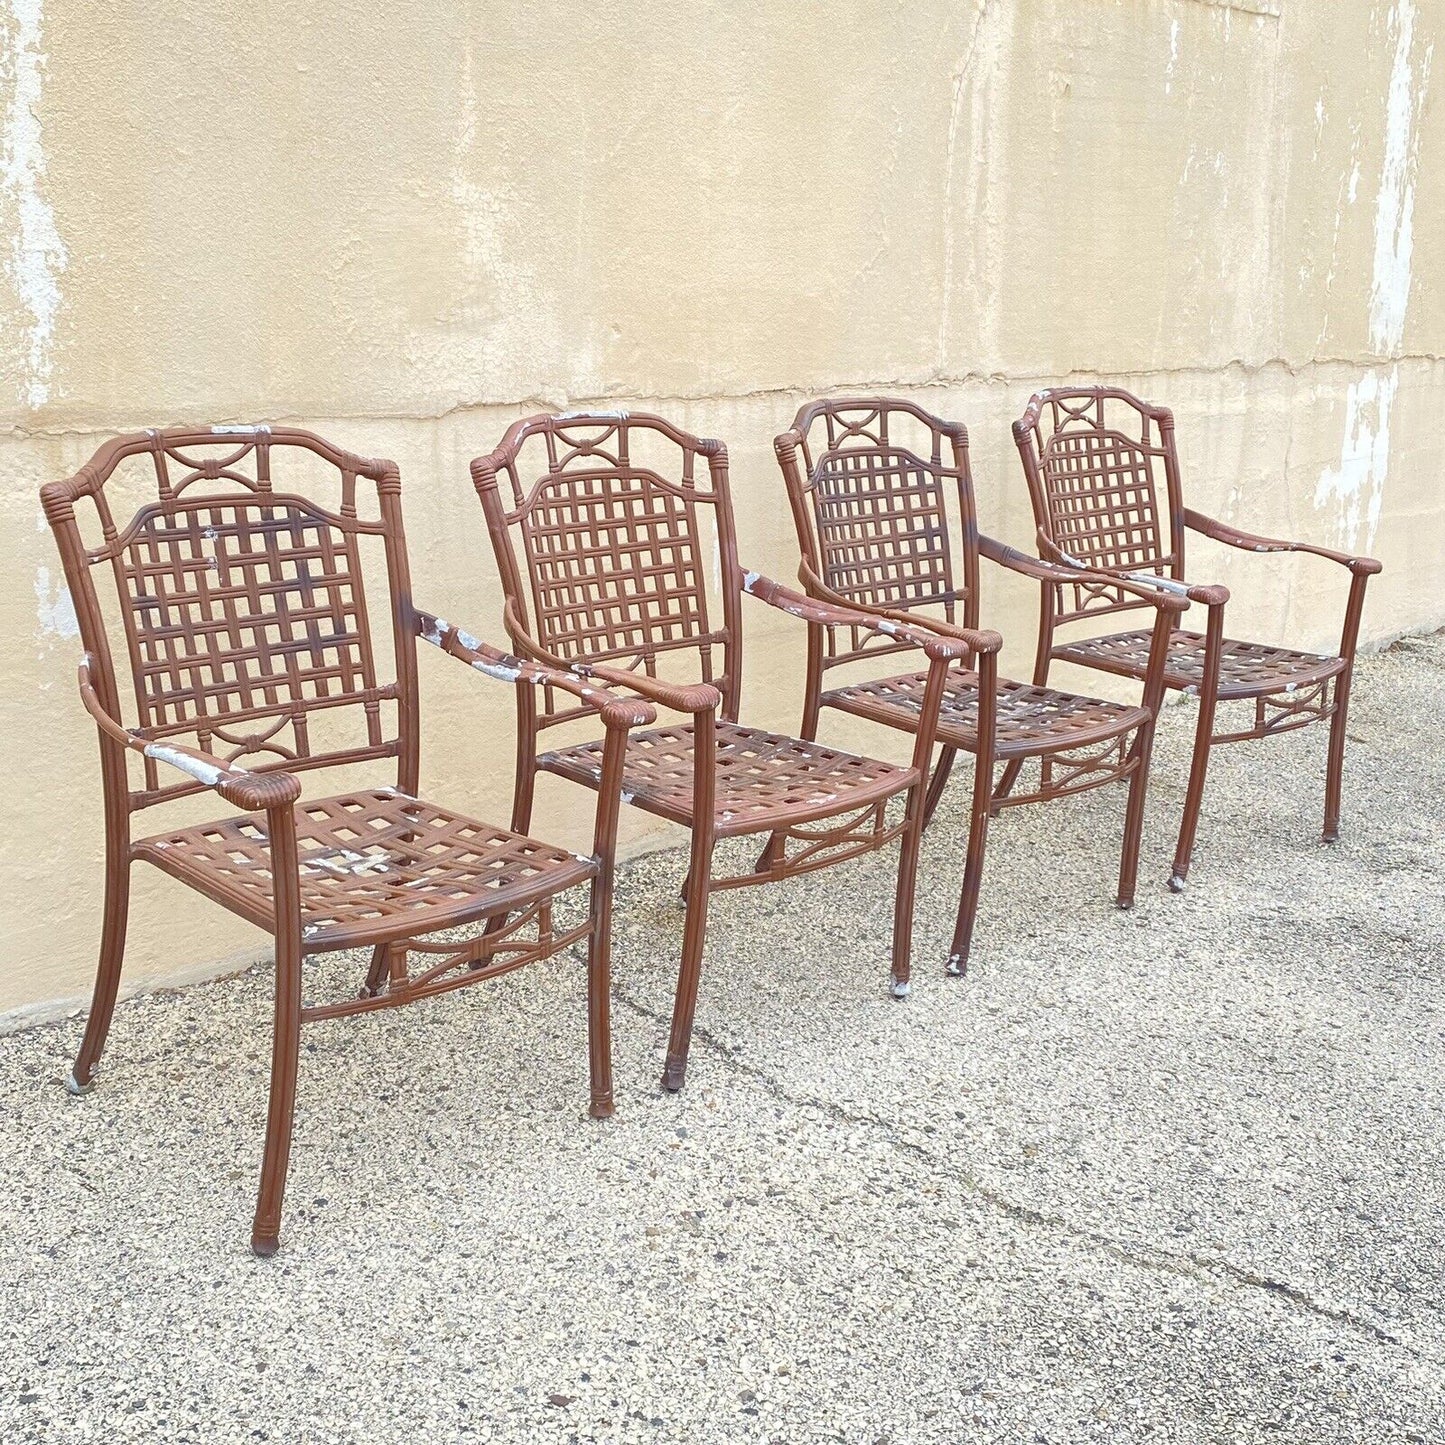 Cast Aluminum Basket Weave Lattice Rattan Patio Outdoor Arm Chairs - Set of 4